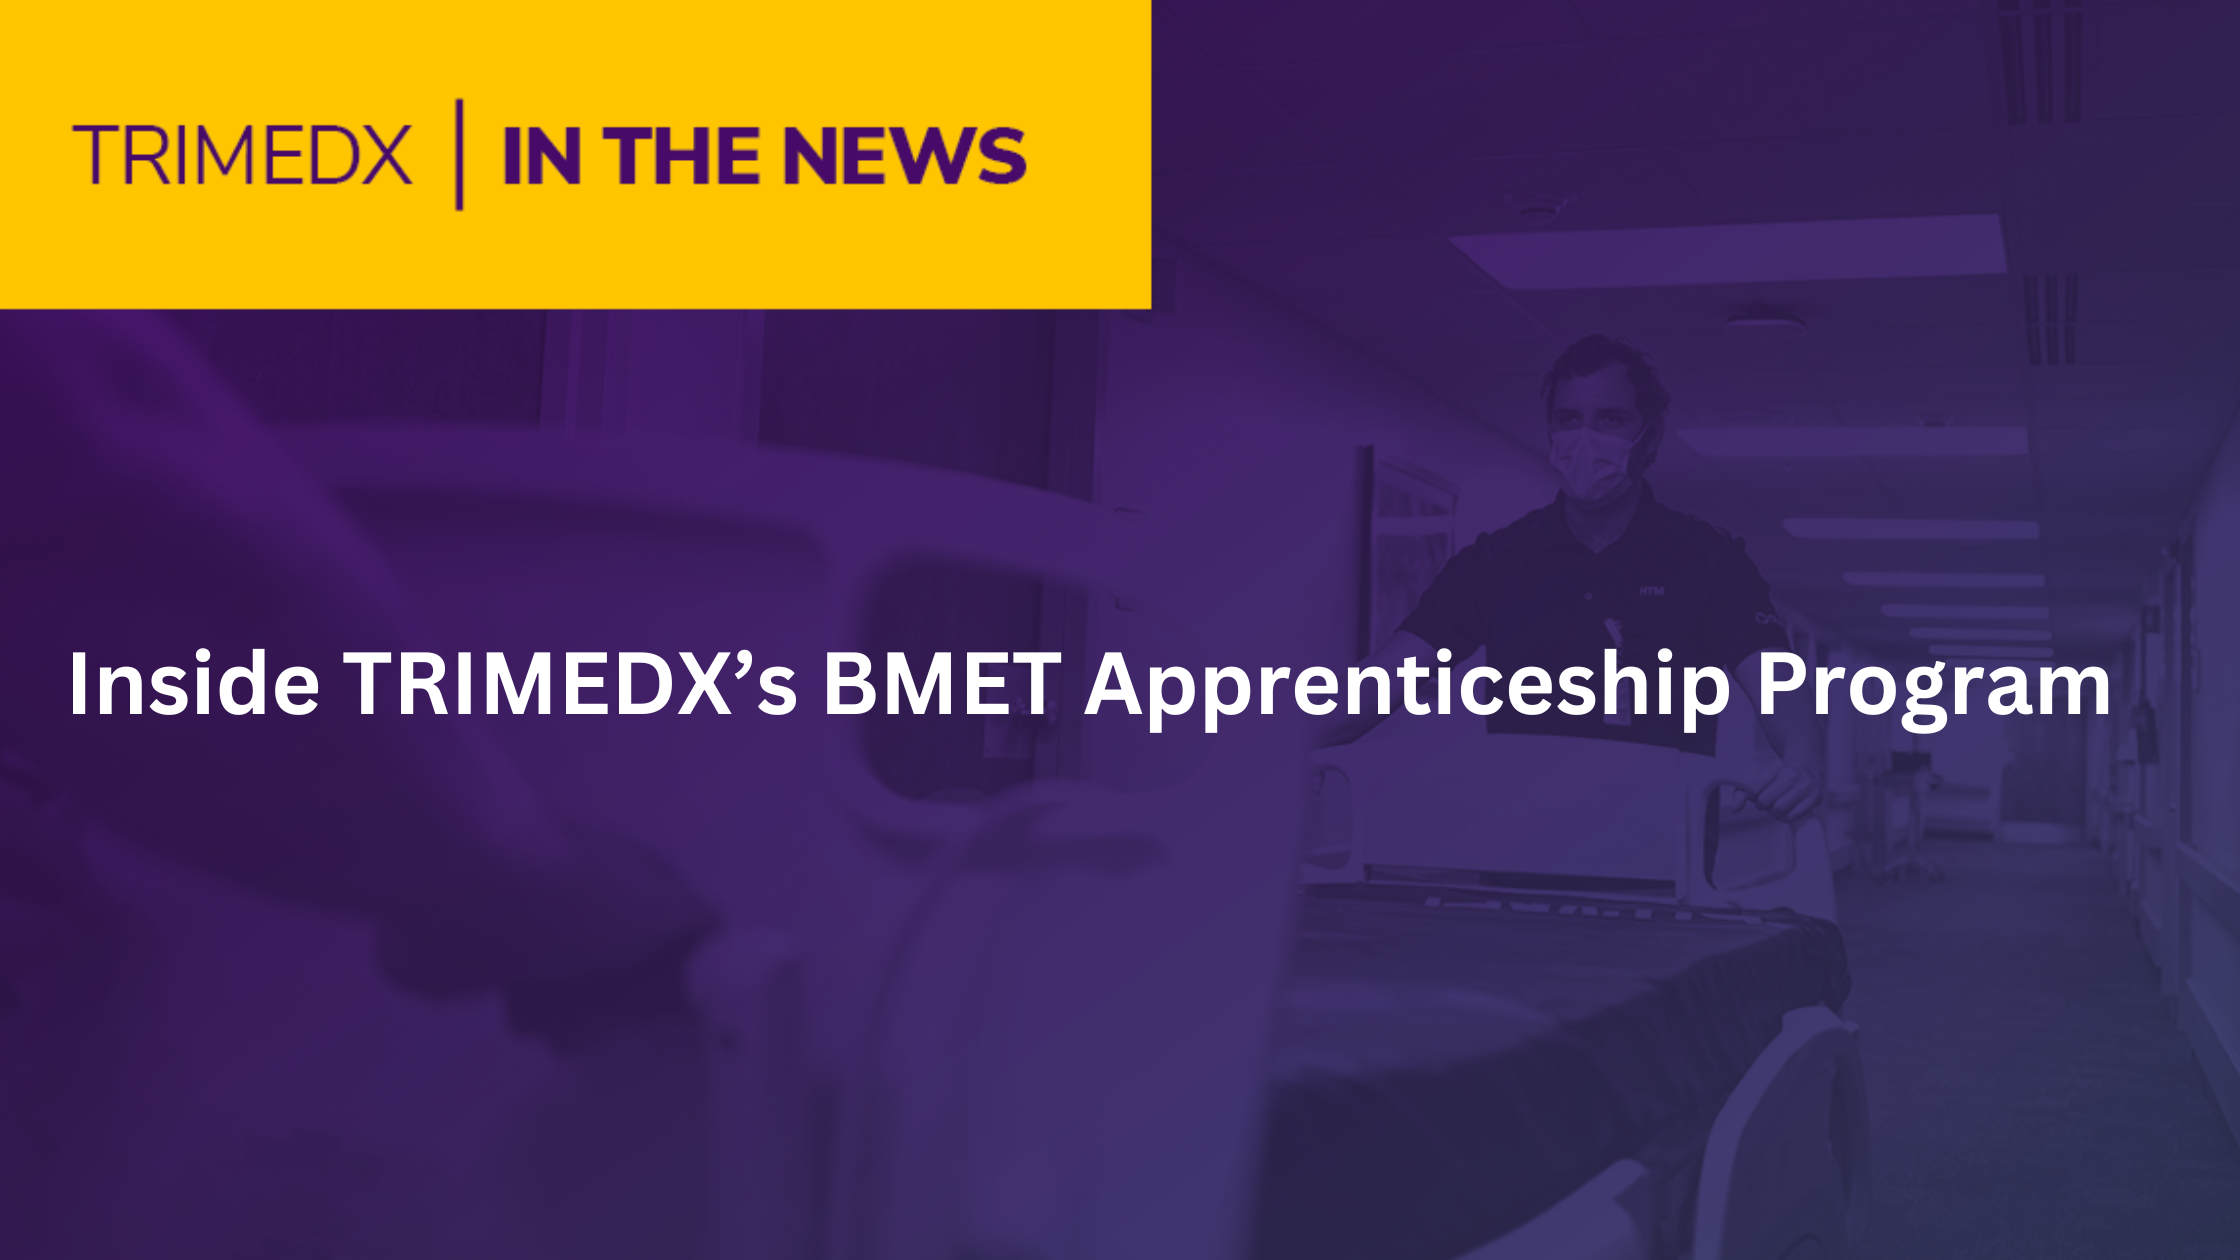 Inside TRIMEDX’s BMET Apprenticeship Program